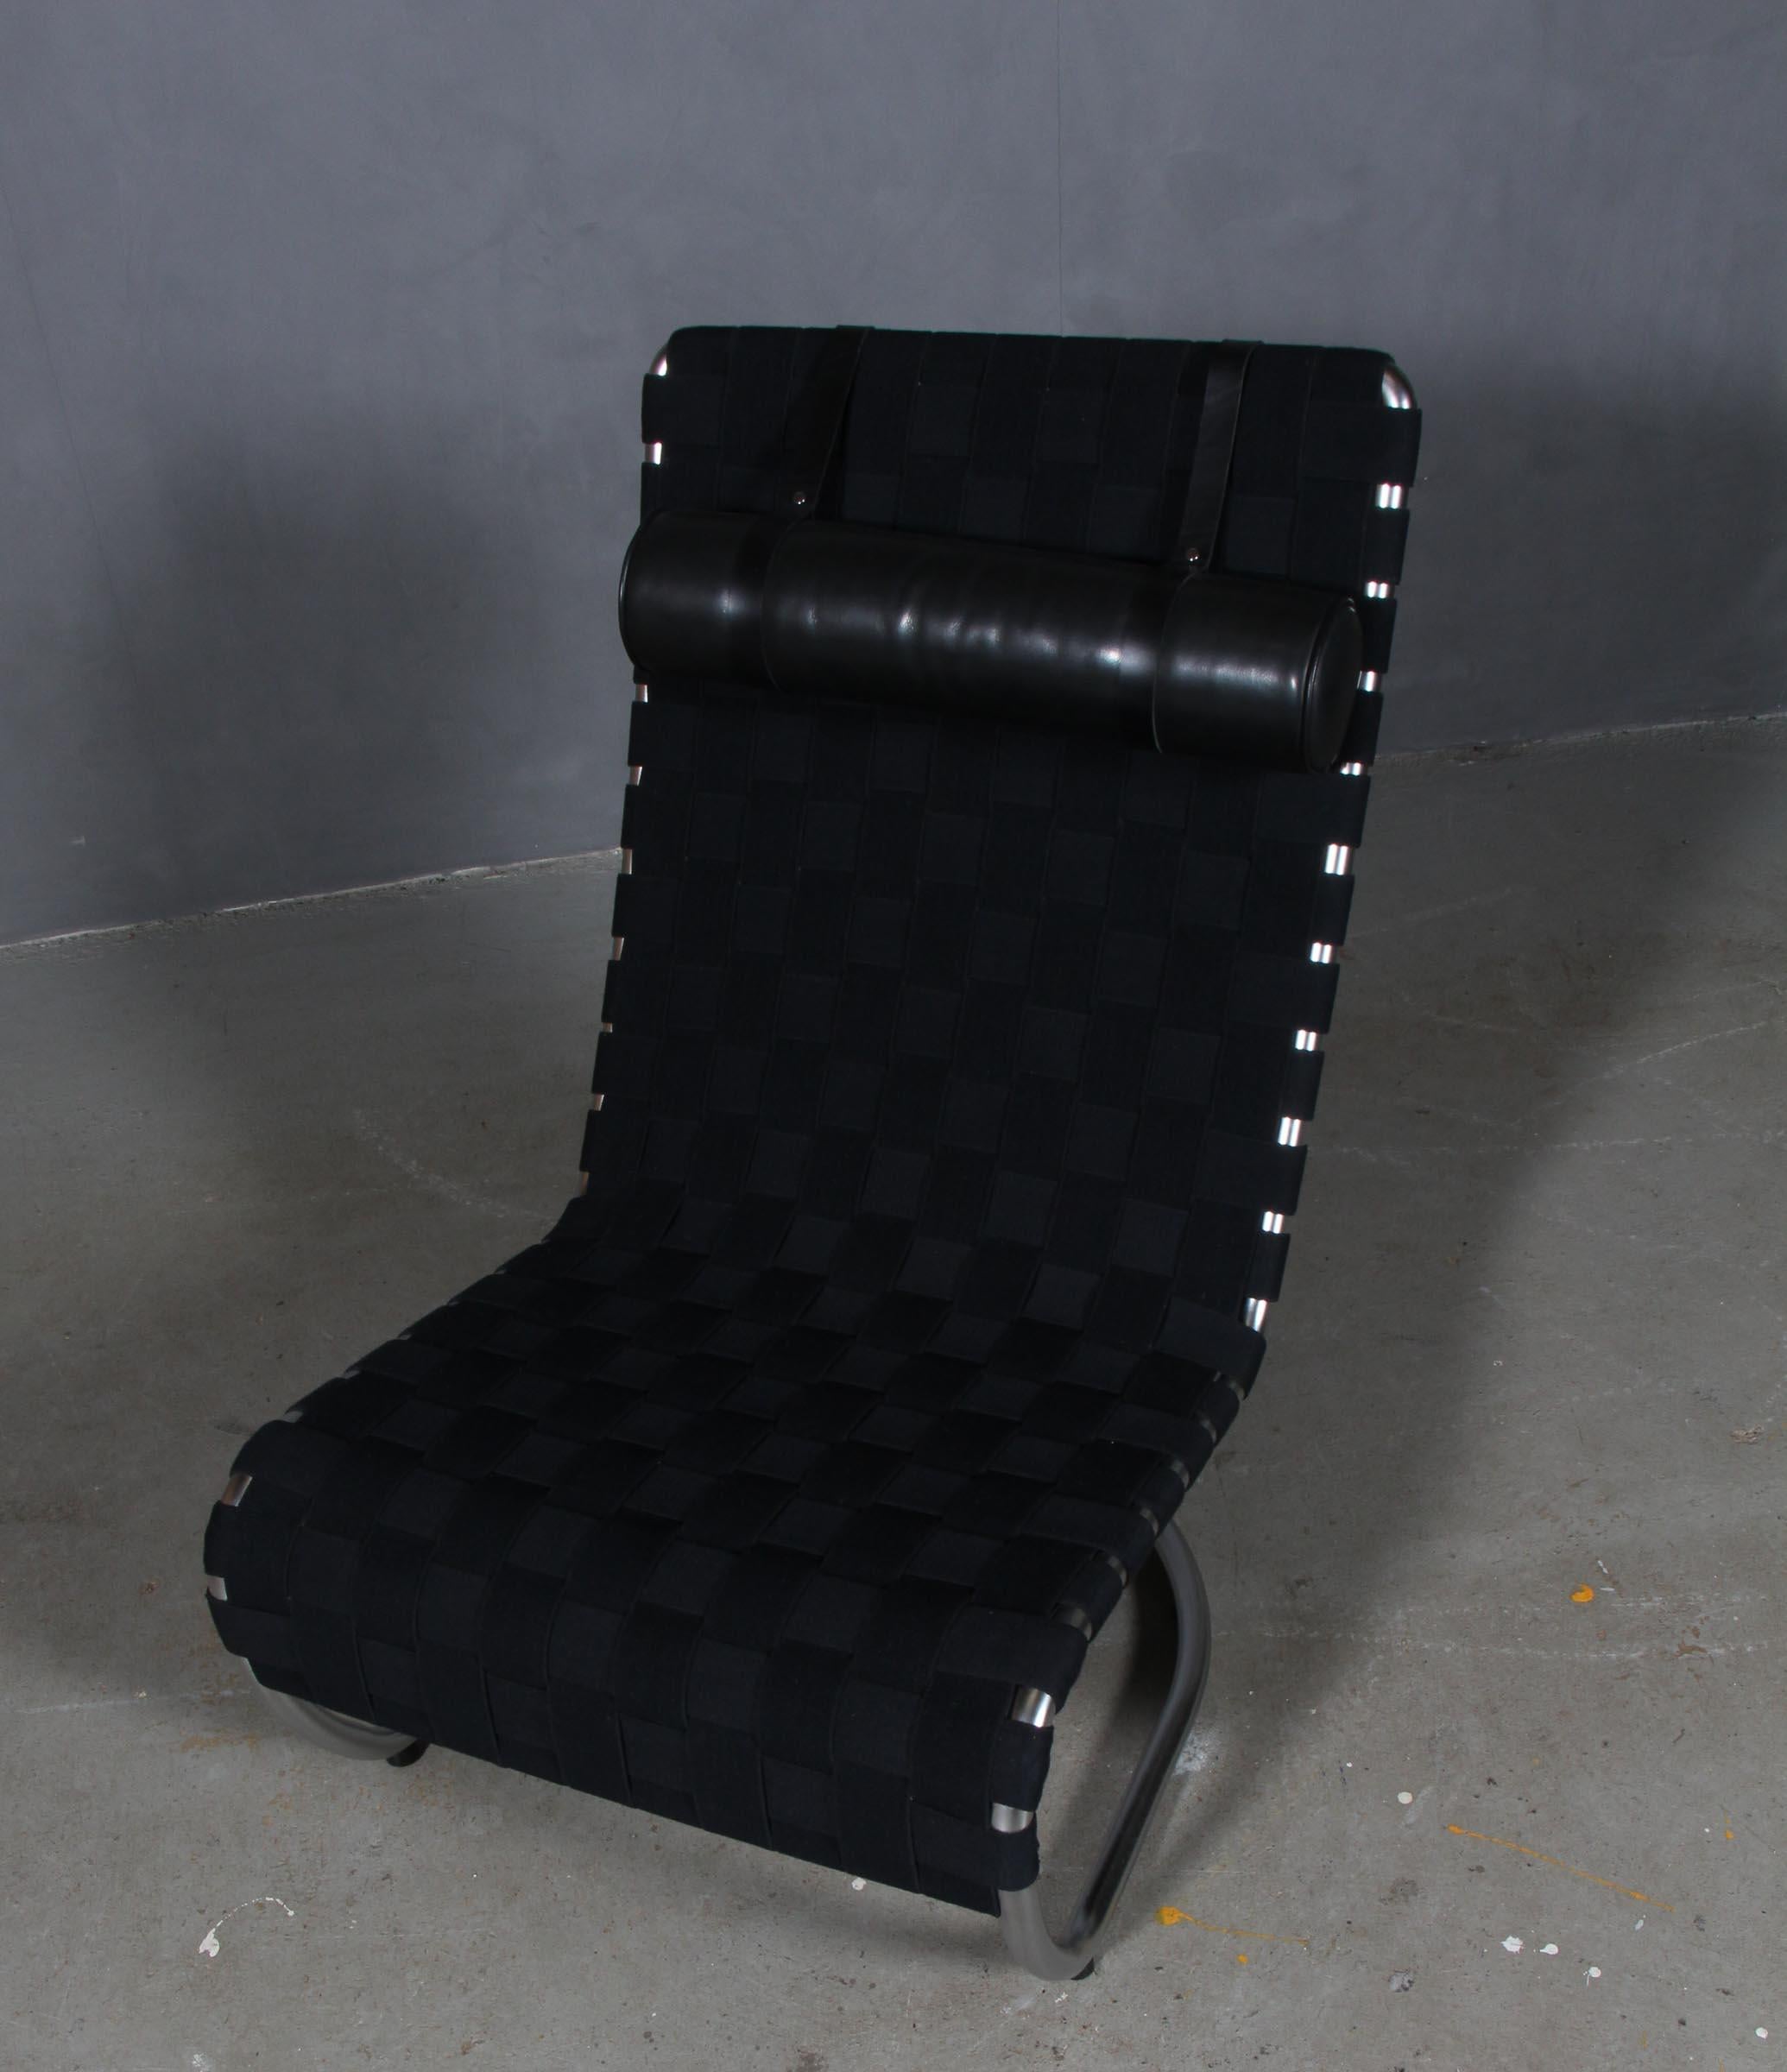 Karsten Gransgaard free swinger lounge chair with steel frame. 

Black elastic webbing. Vacona leather backrest.